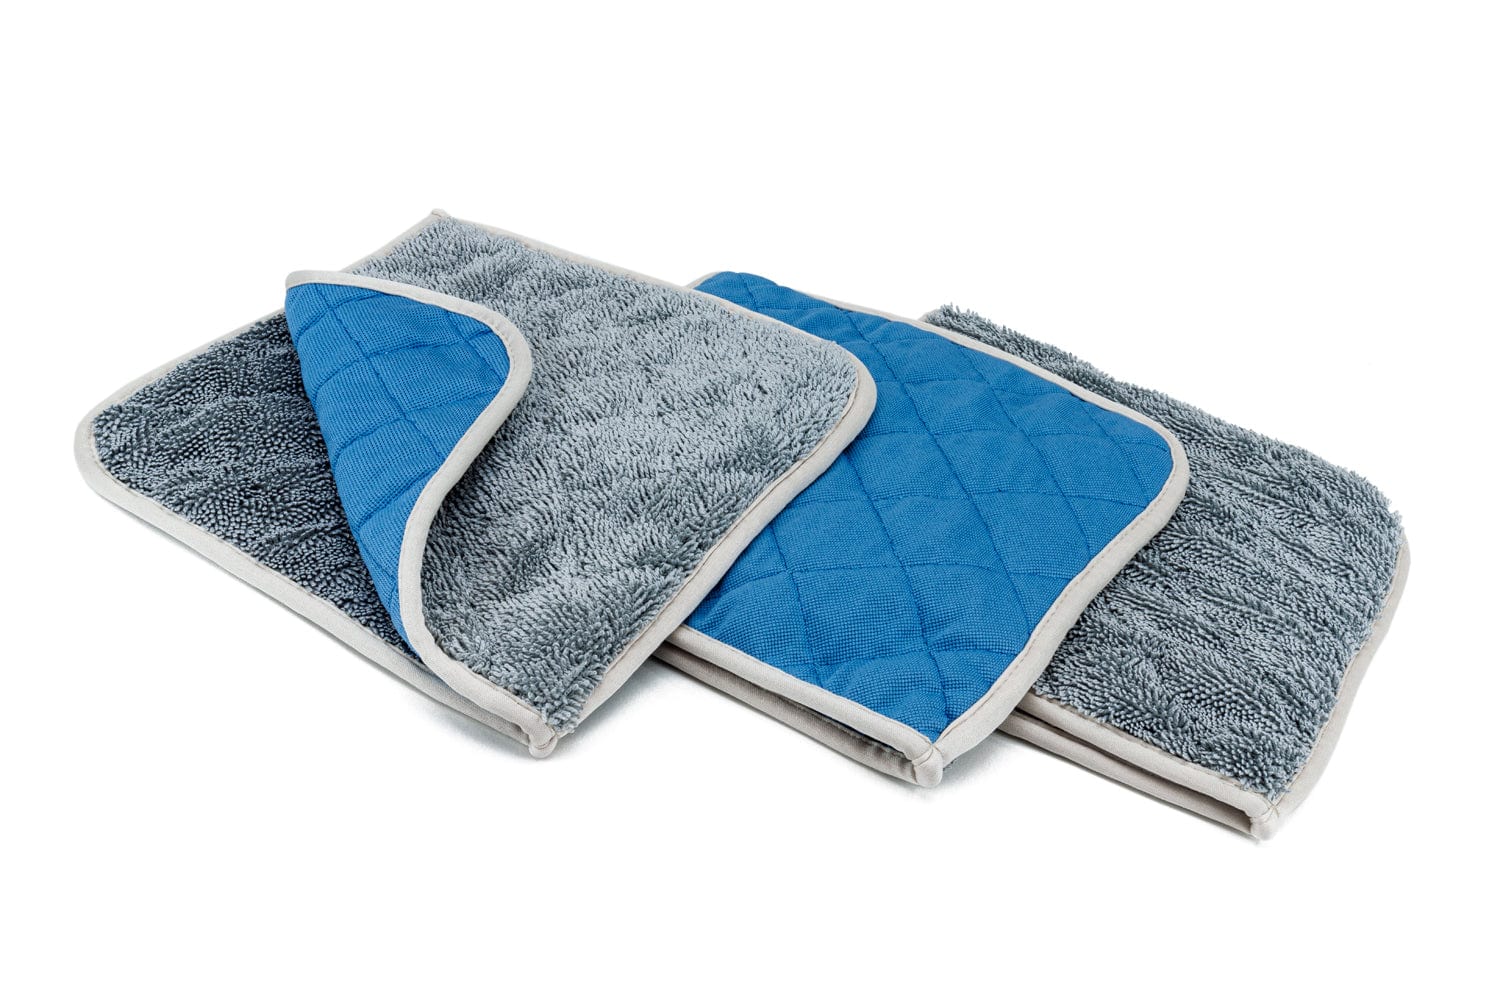 Autofiber The Reacher Glass Cleaning Kit w/Glass Flip Towels (Smooth/Twist)